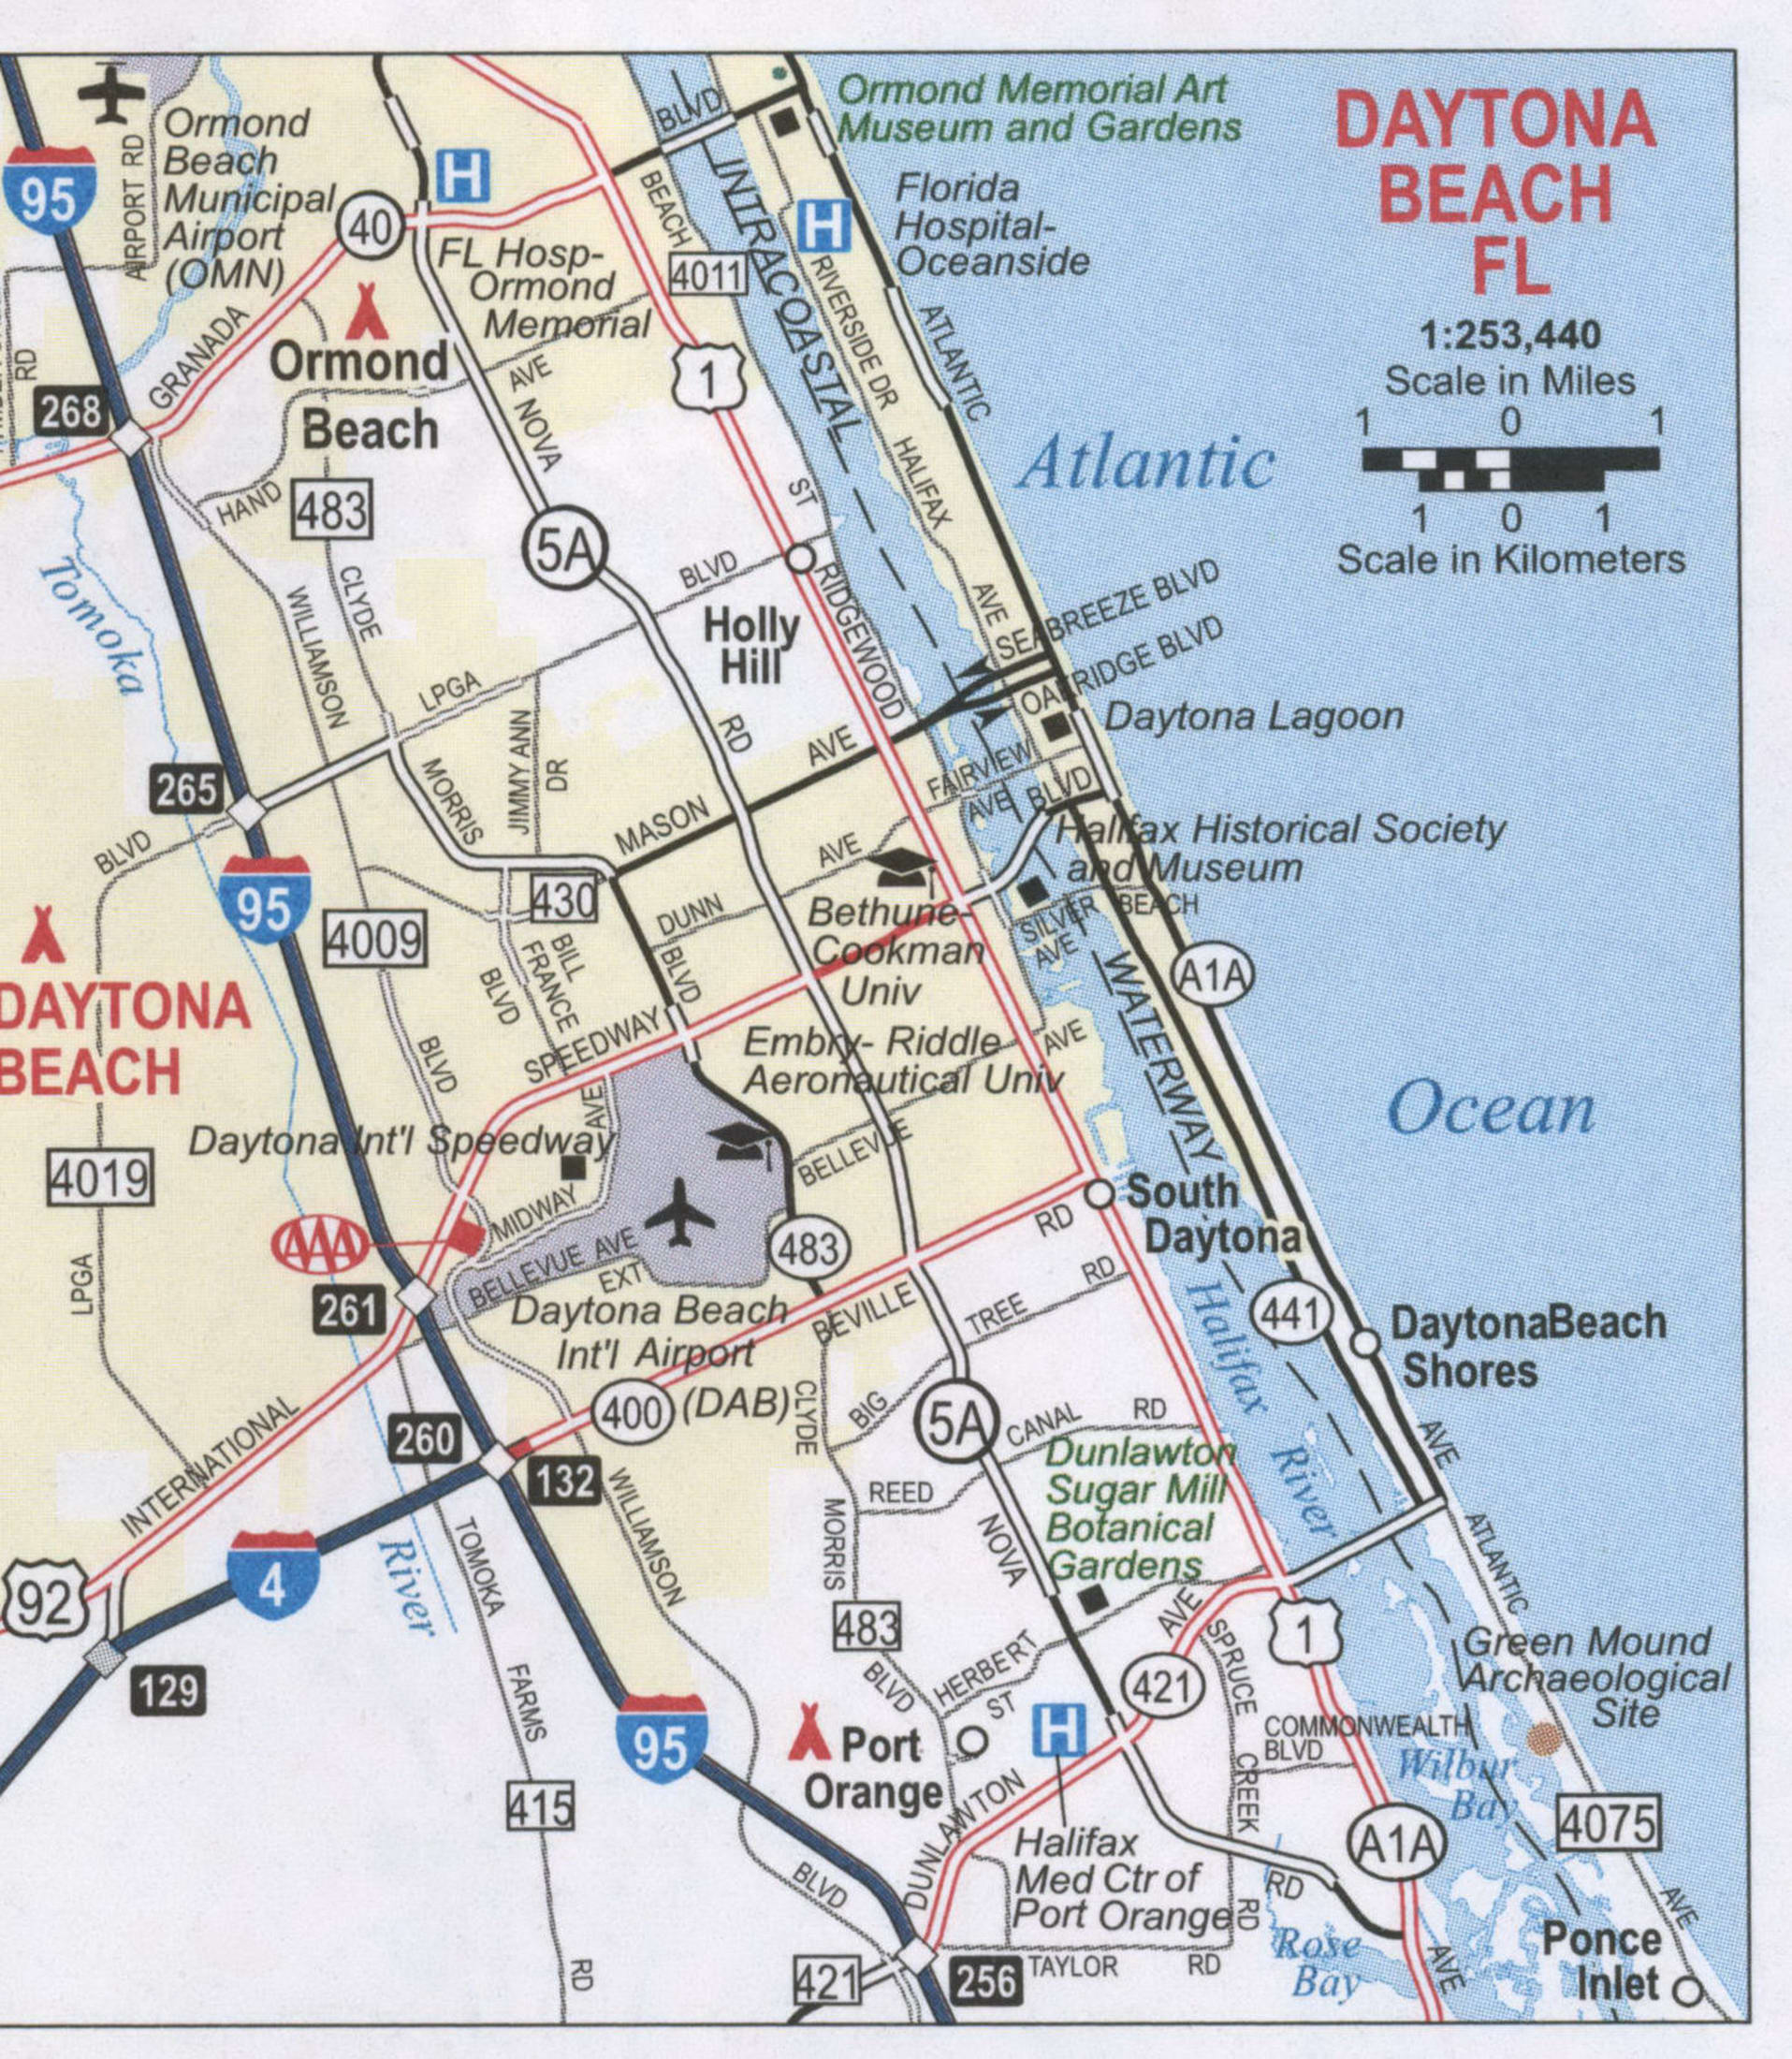 Daytona Beach FL road map